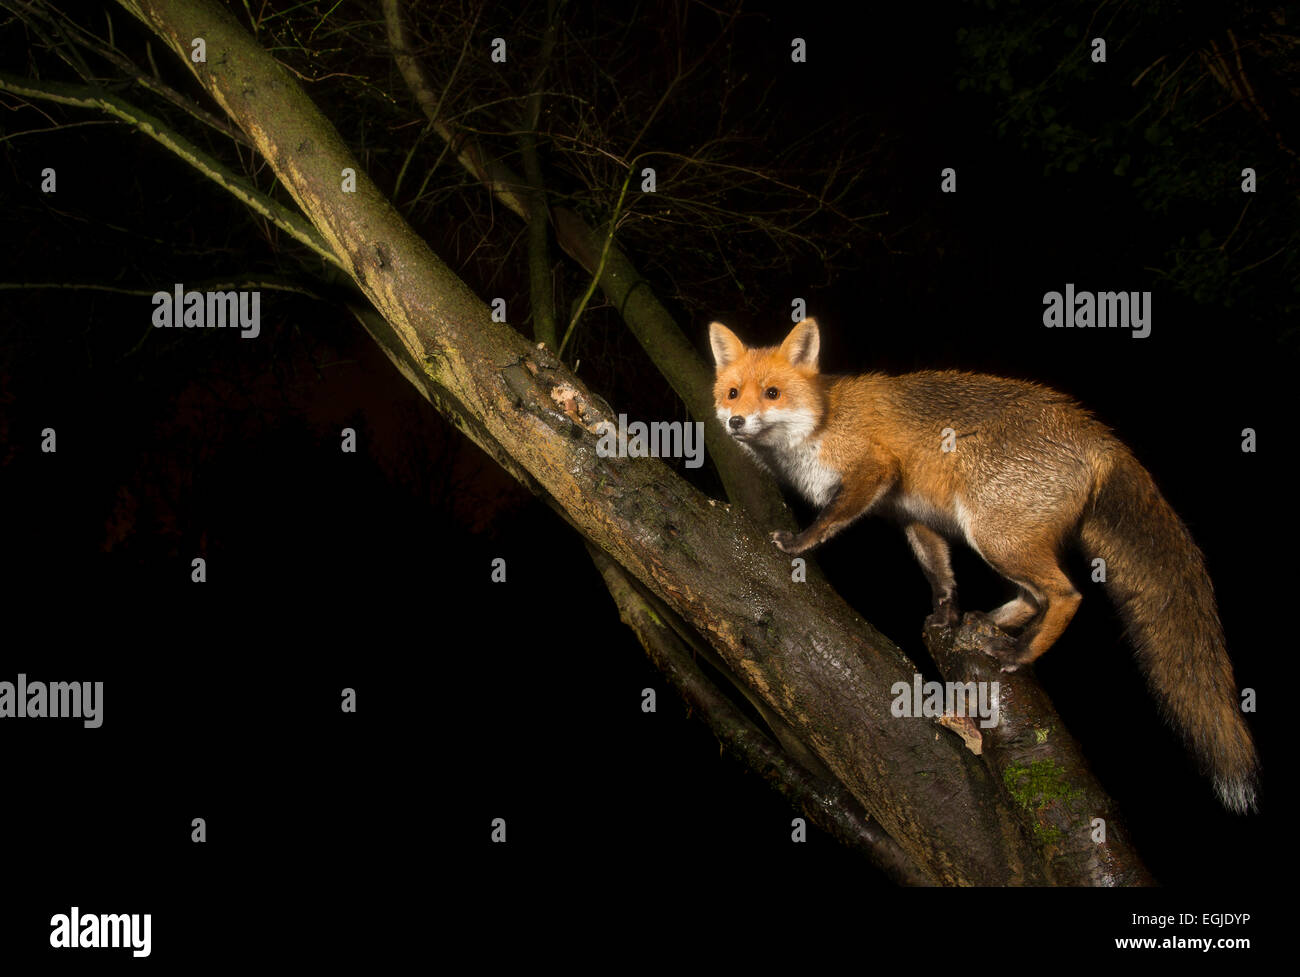 European Red fox, Vulpes vulpes, climbing up tree during night, London, United Kingdom Stock Photo